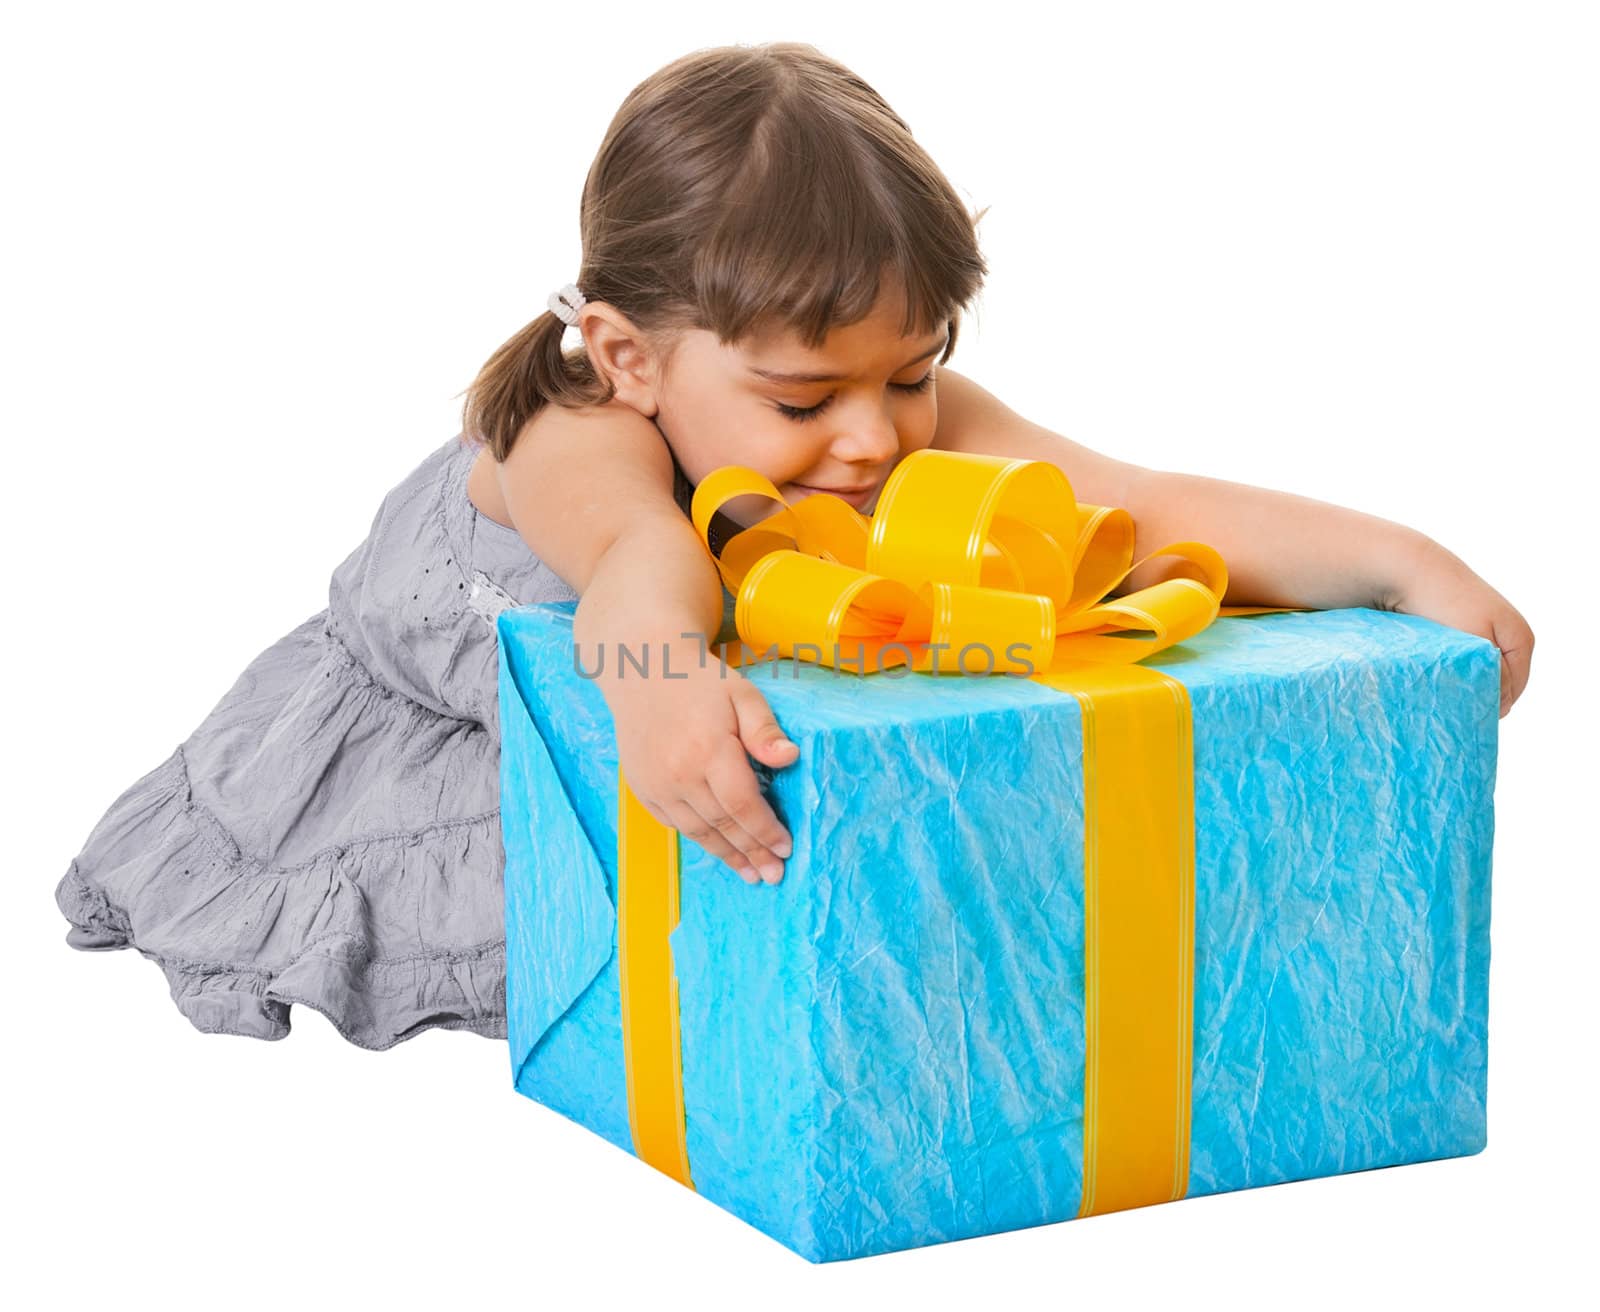 Happy child embraces large birthday gift isolated on white background